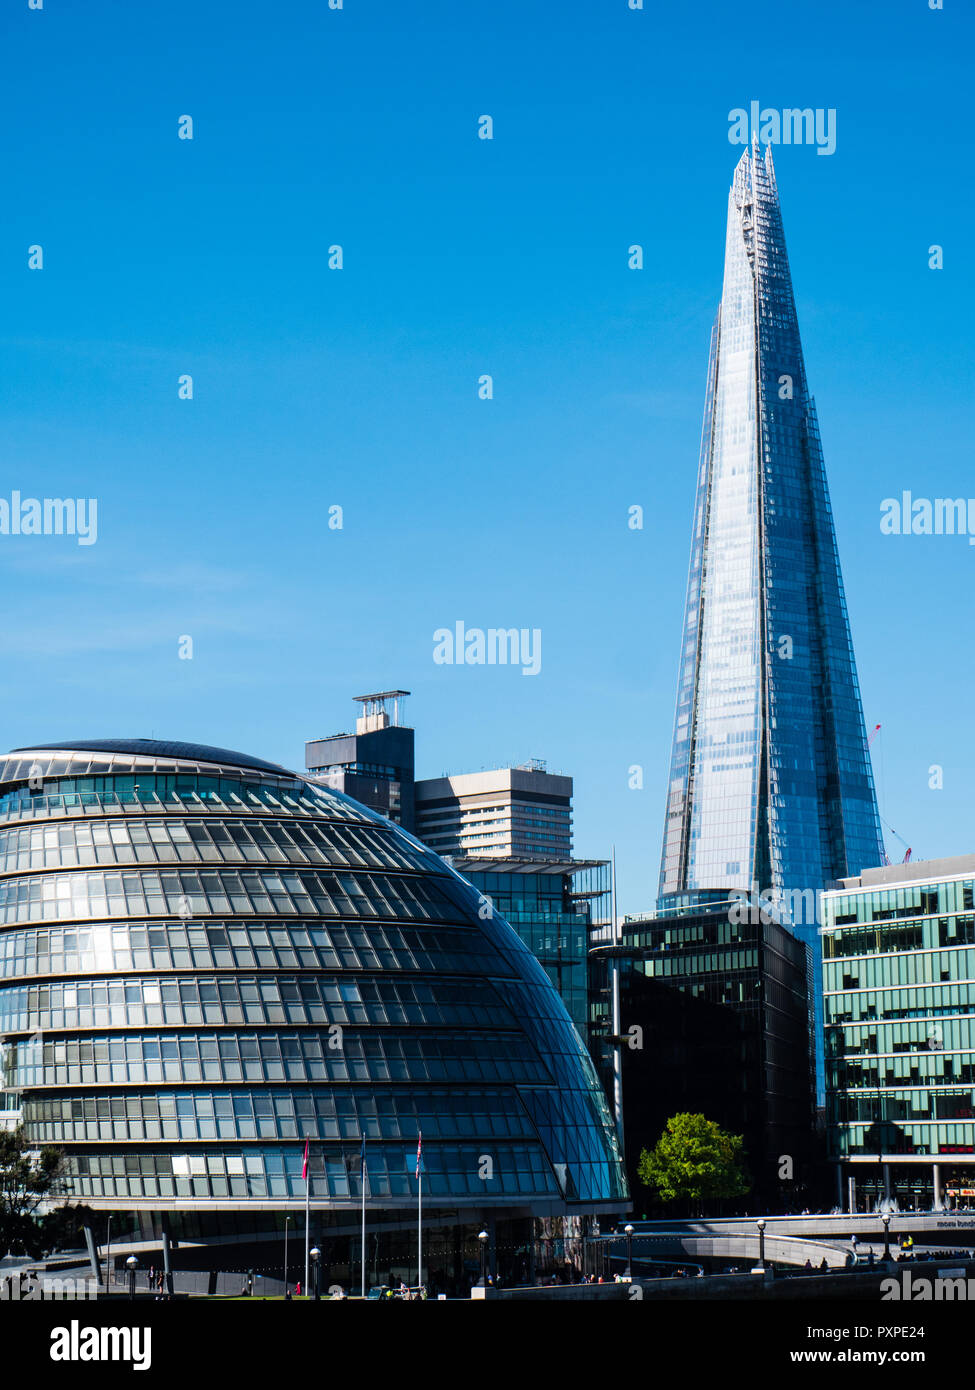 London Assembly, London City Hall, mit dem Shard, an der Themse, South Bank, London, England, UK, GB. Stockfoto